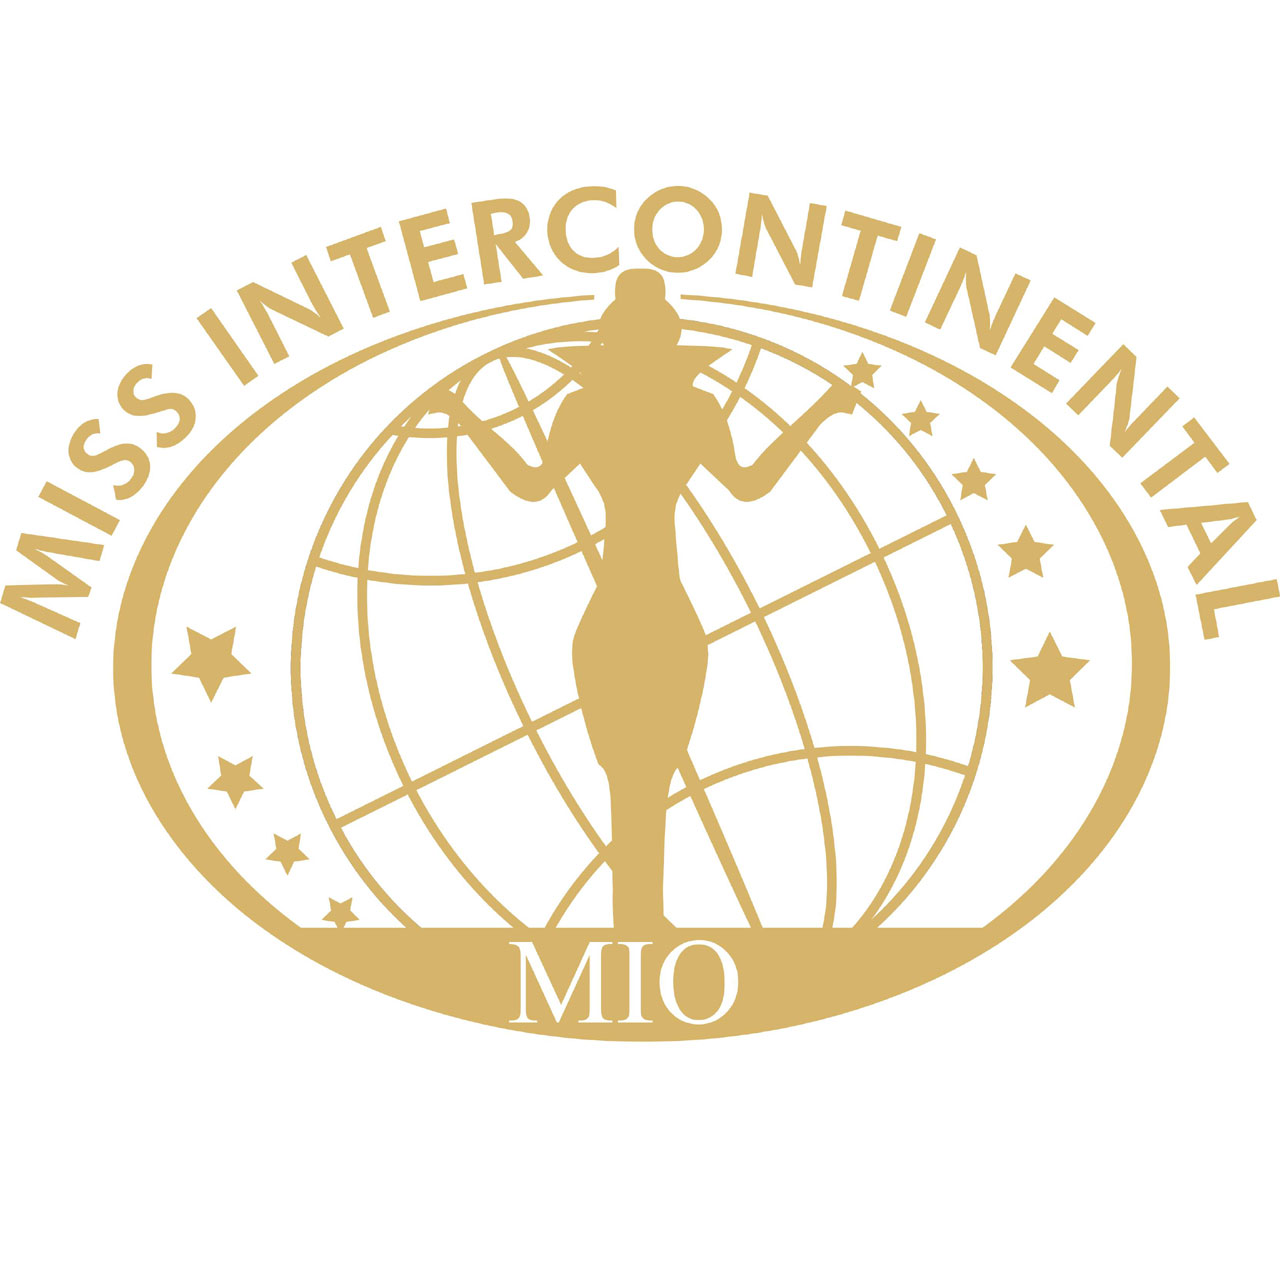 Miss Intercontinental - logo